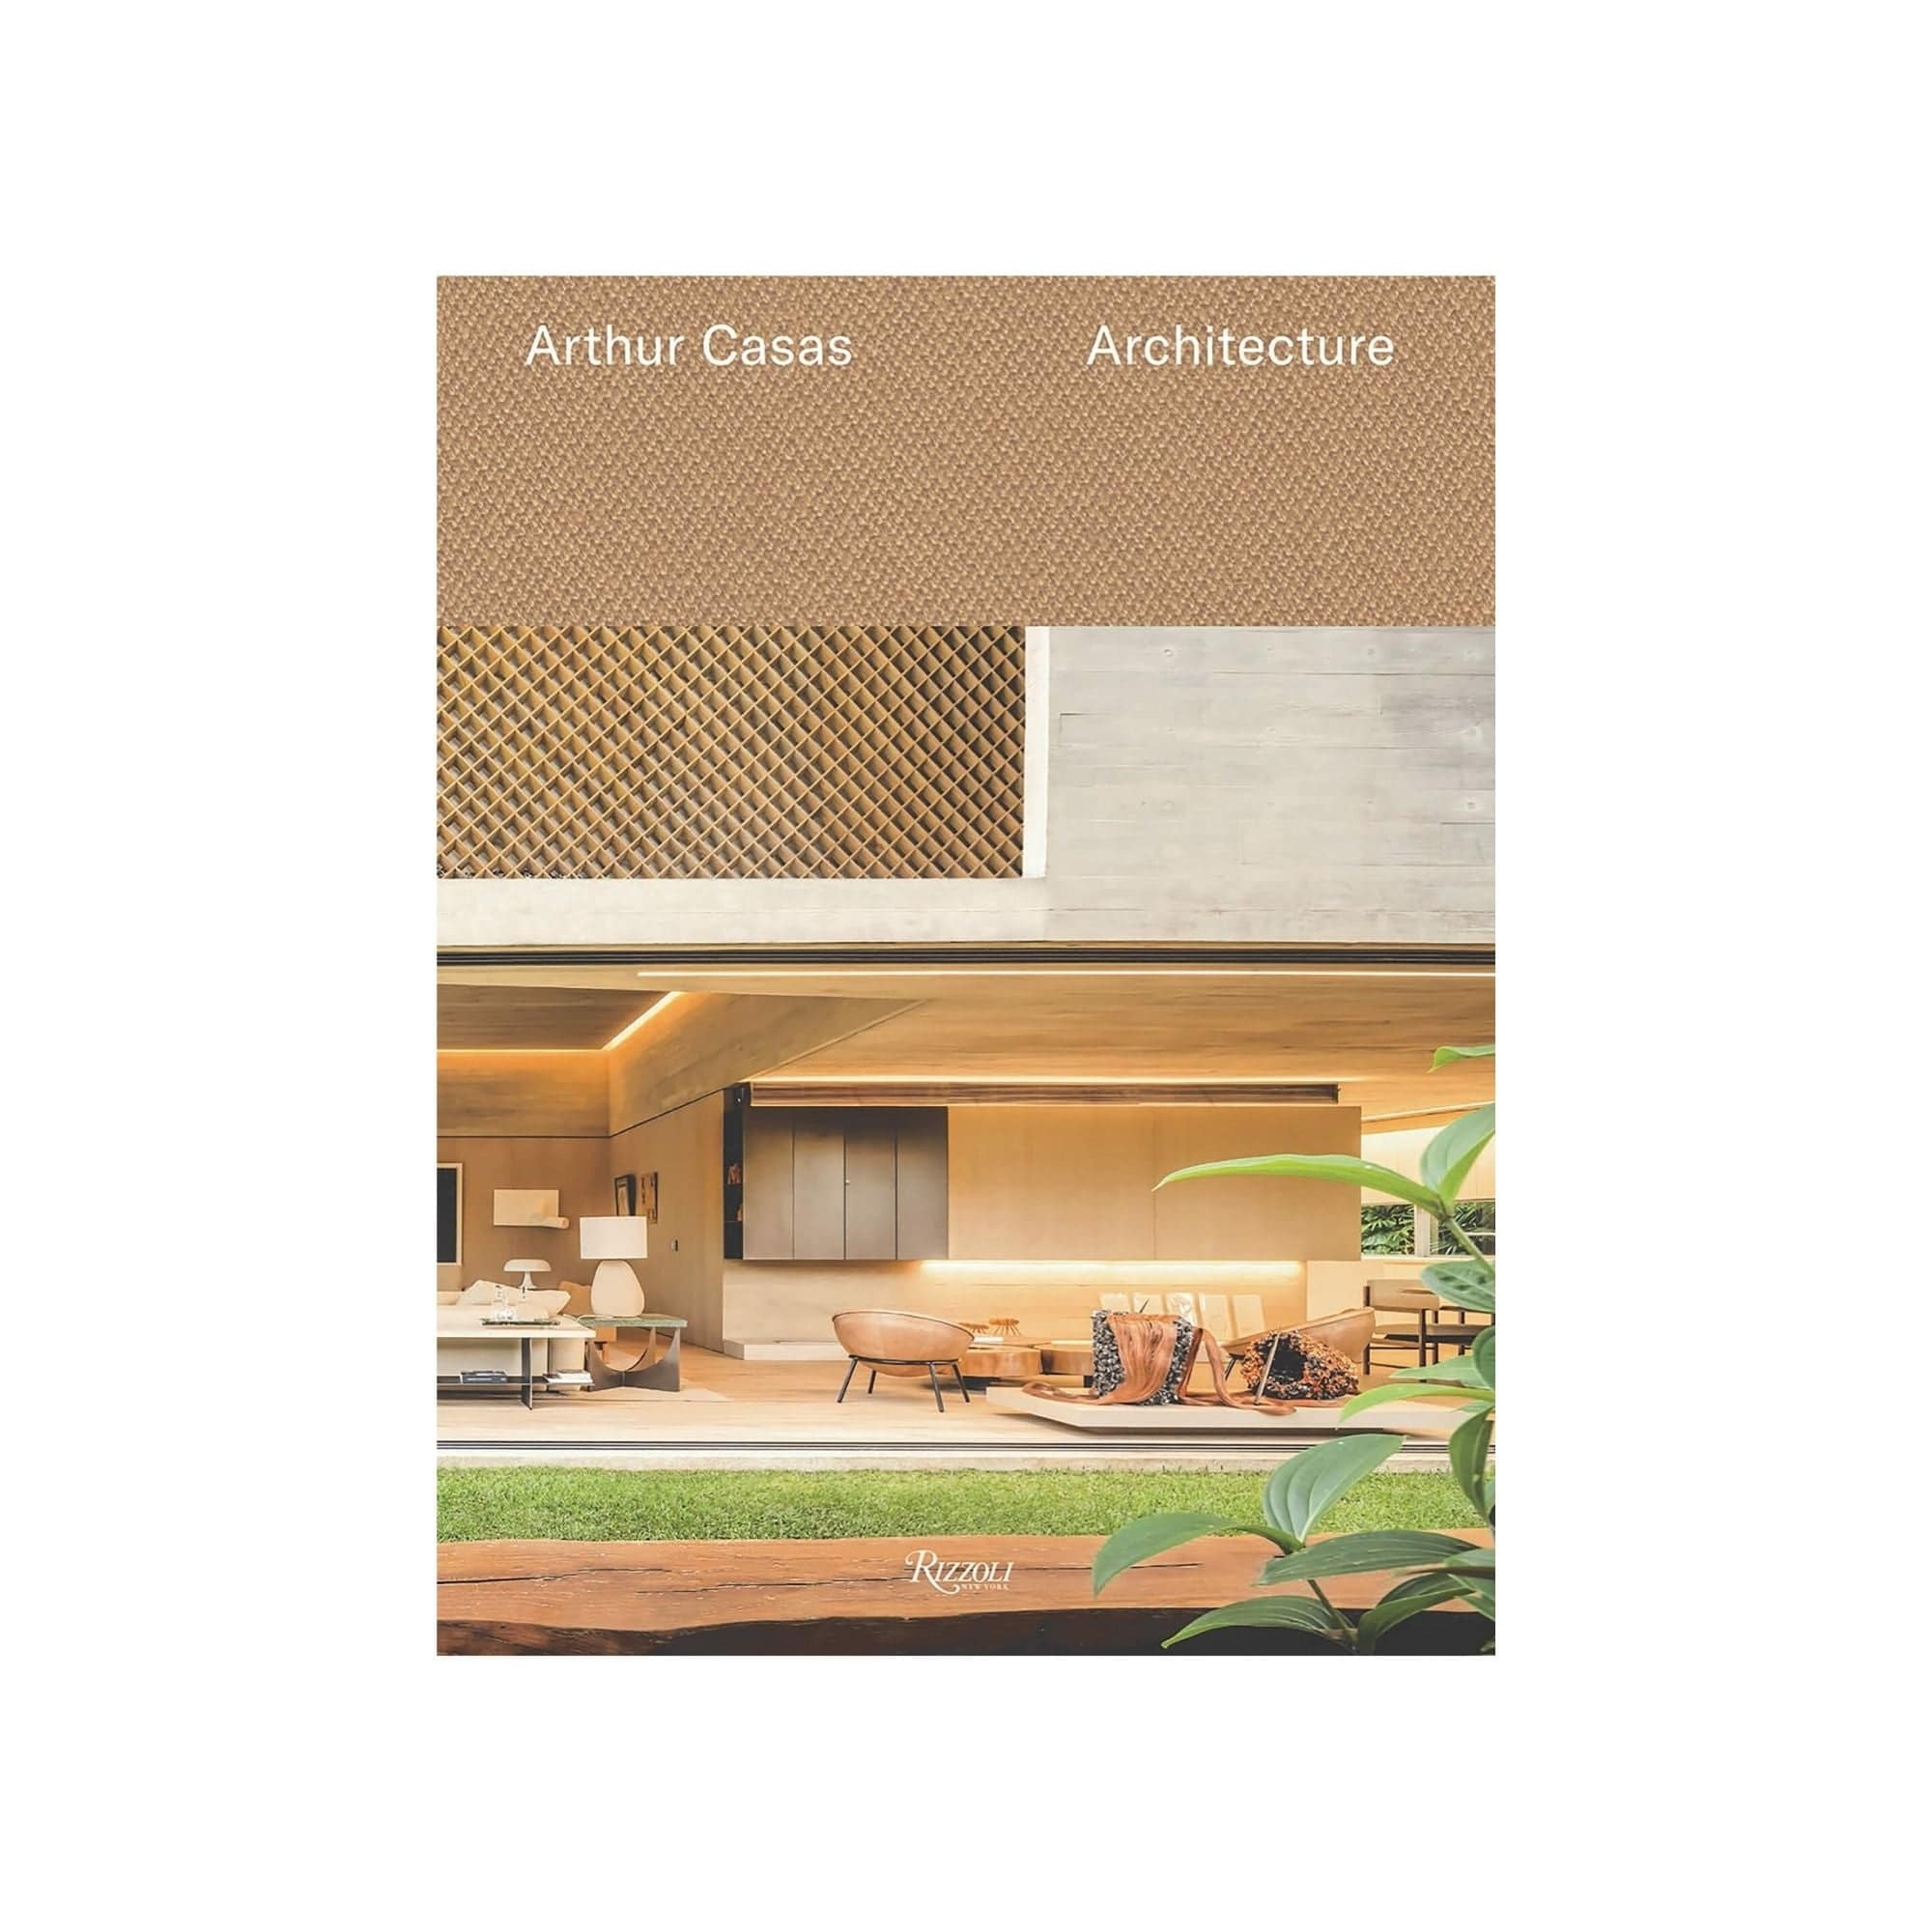 Arthur Casas: Architecture